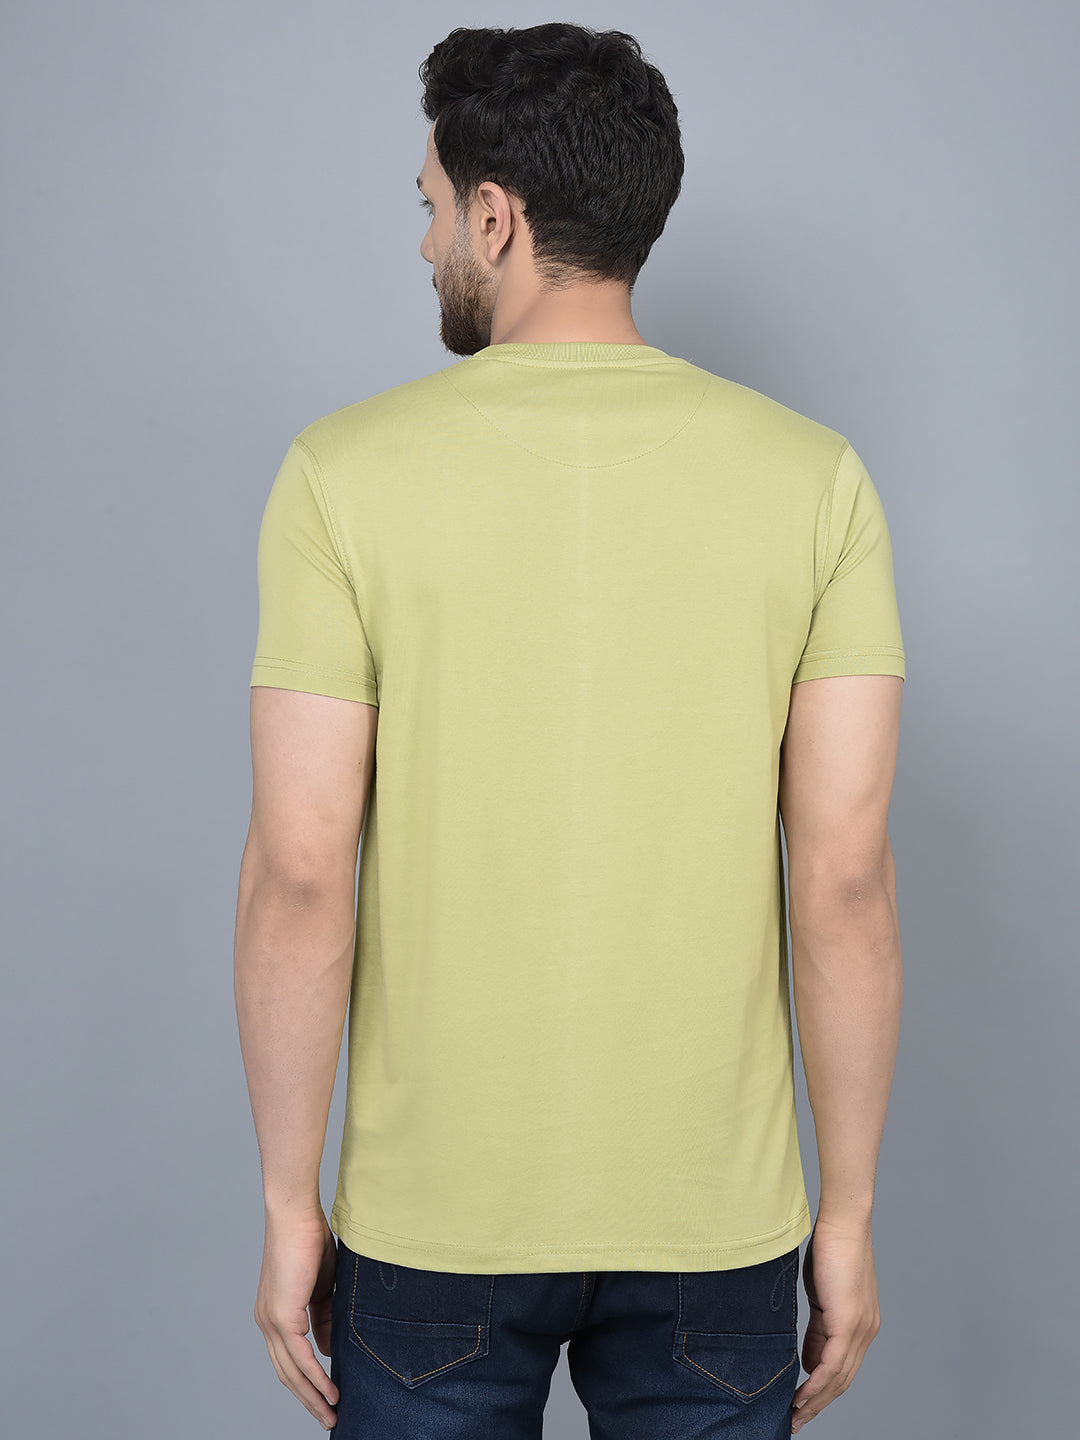 Cobb Green Printed Round Neck T-Shirt